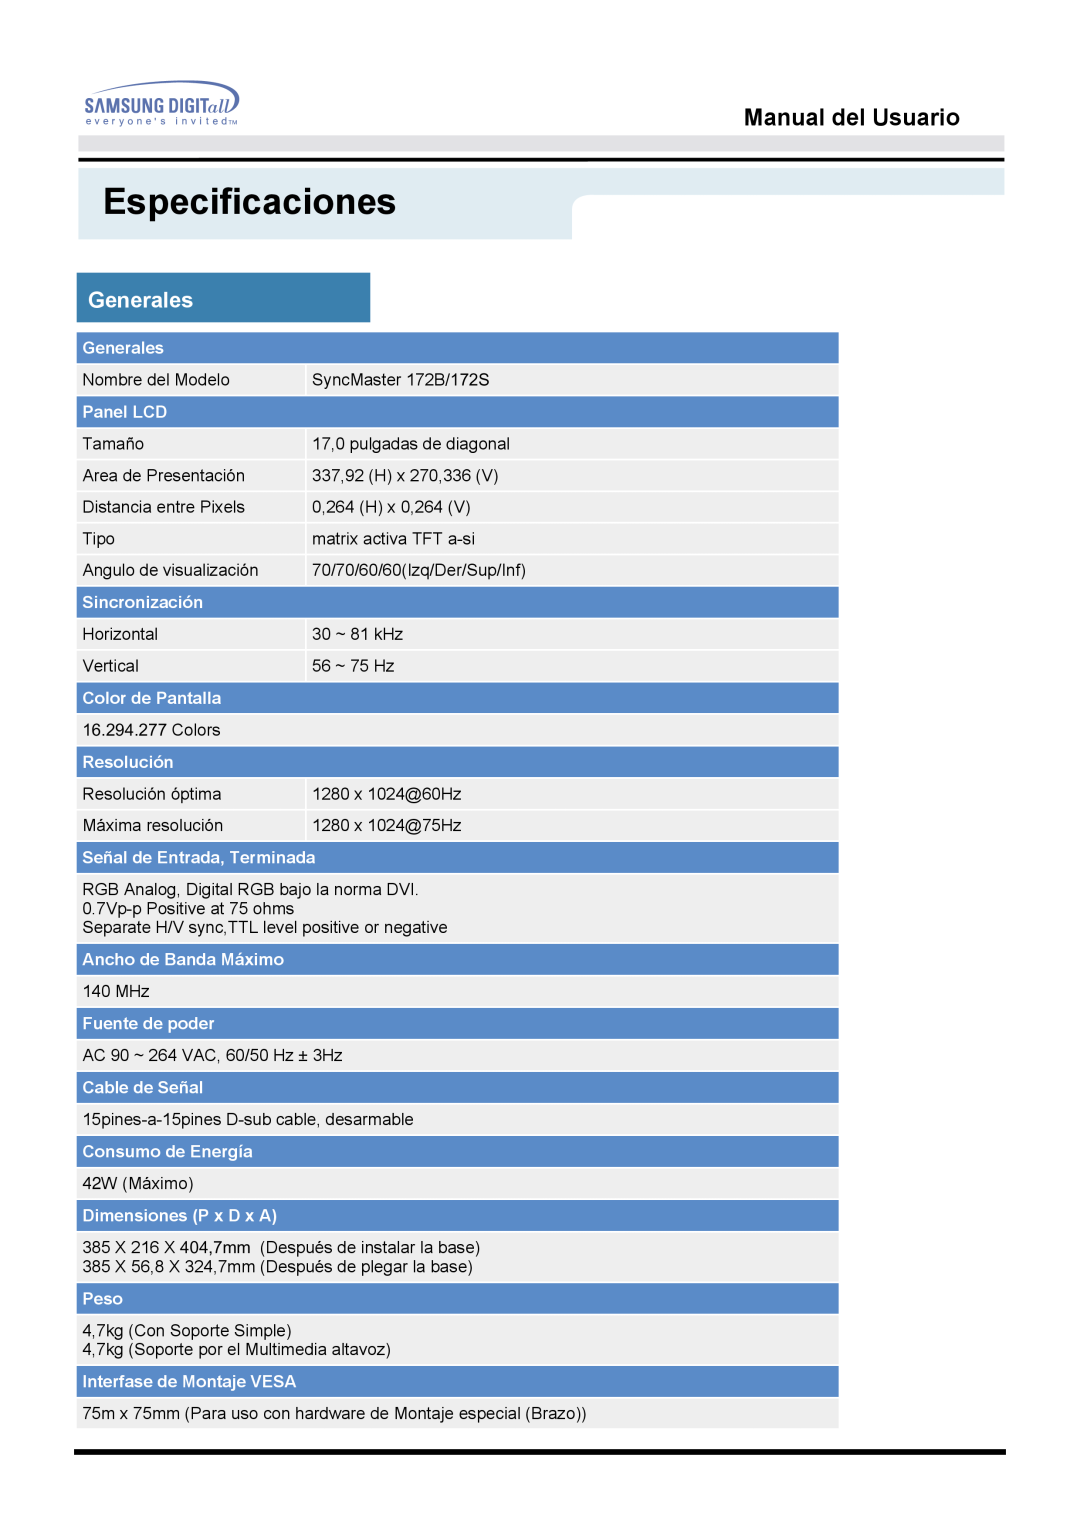 Samsung MO17PSZSQ/EDC, MO17ESZSZ/EDC, MO17ESZS/EDC, MO17ESDS/EDC manual Especificaciones, Generales, Manual del Usuario 